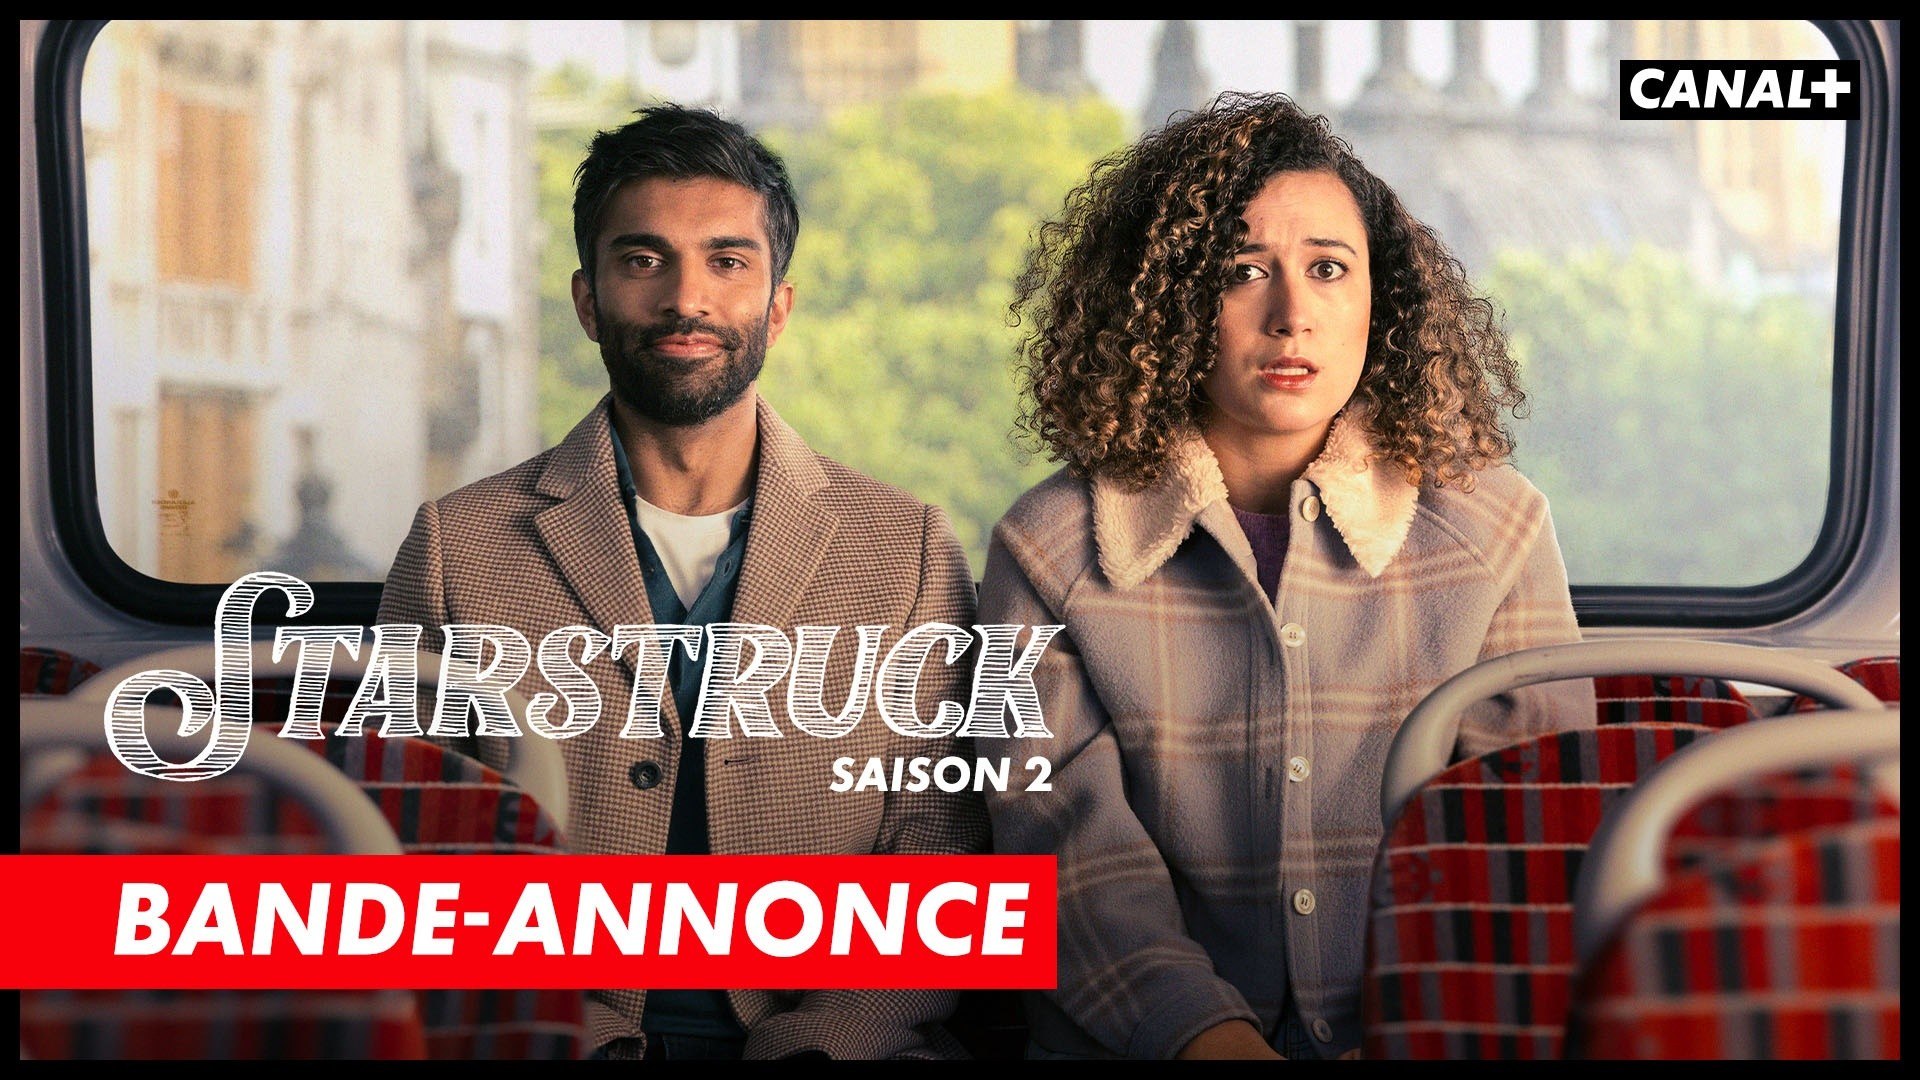 Starstruck, saison 2 - Bande-annonce - Vidéo Dailymotion